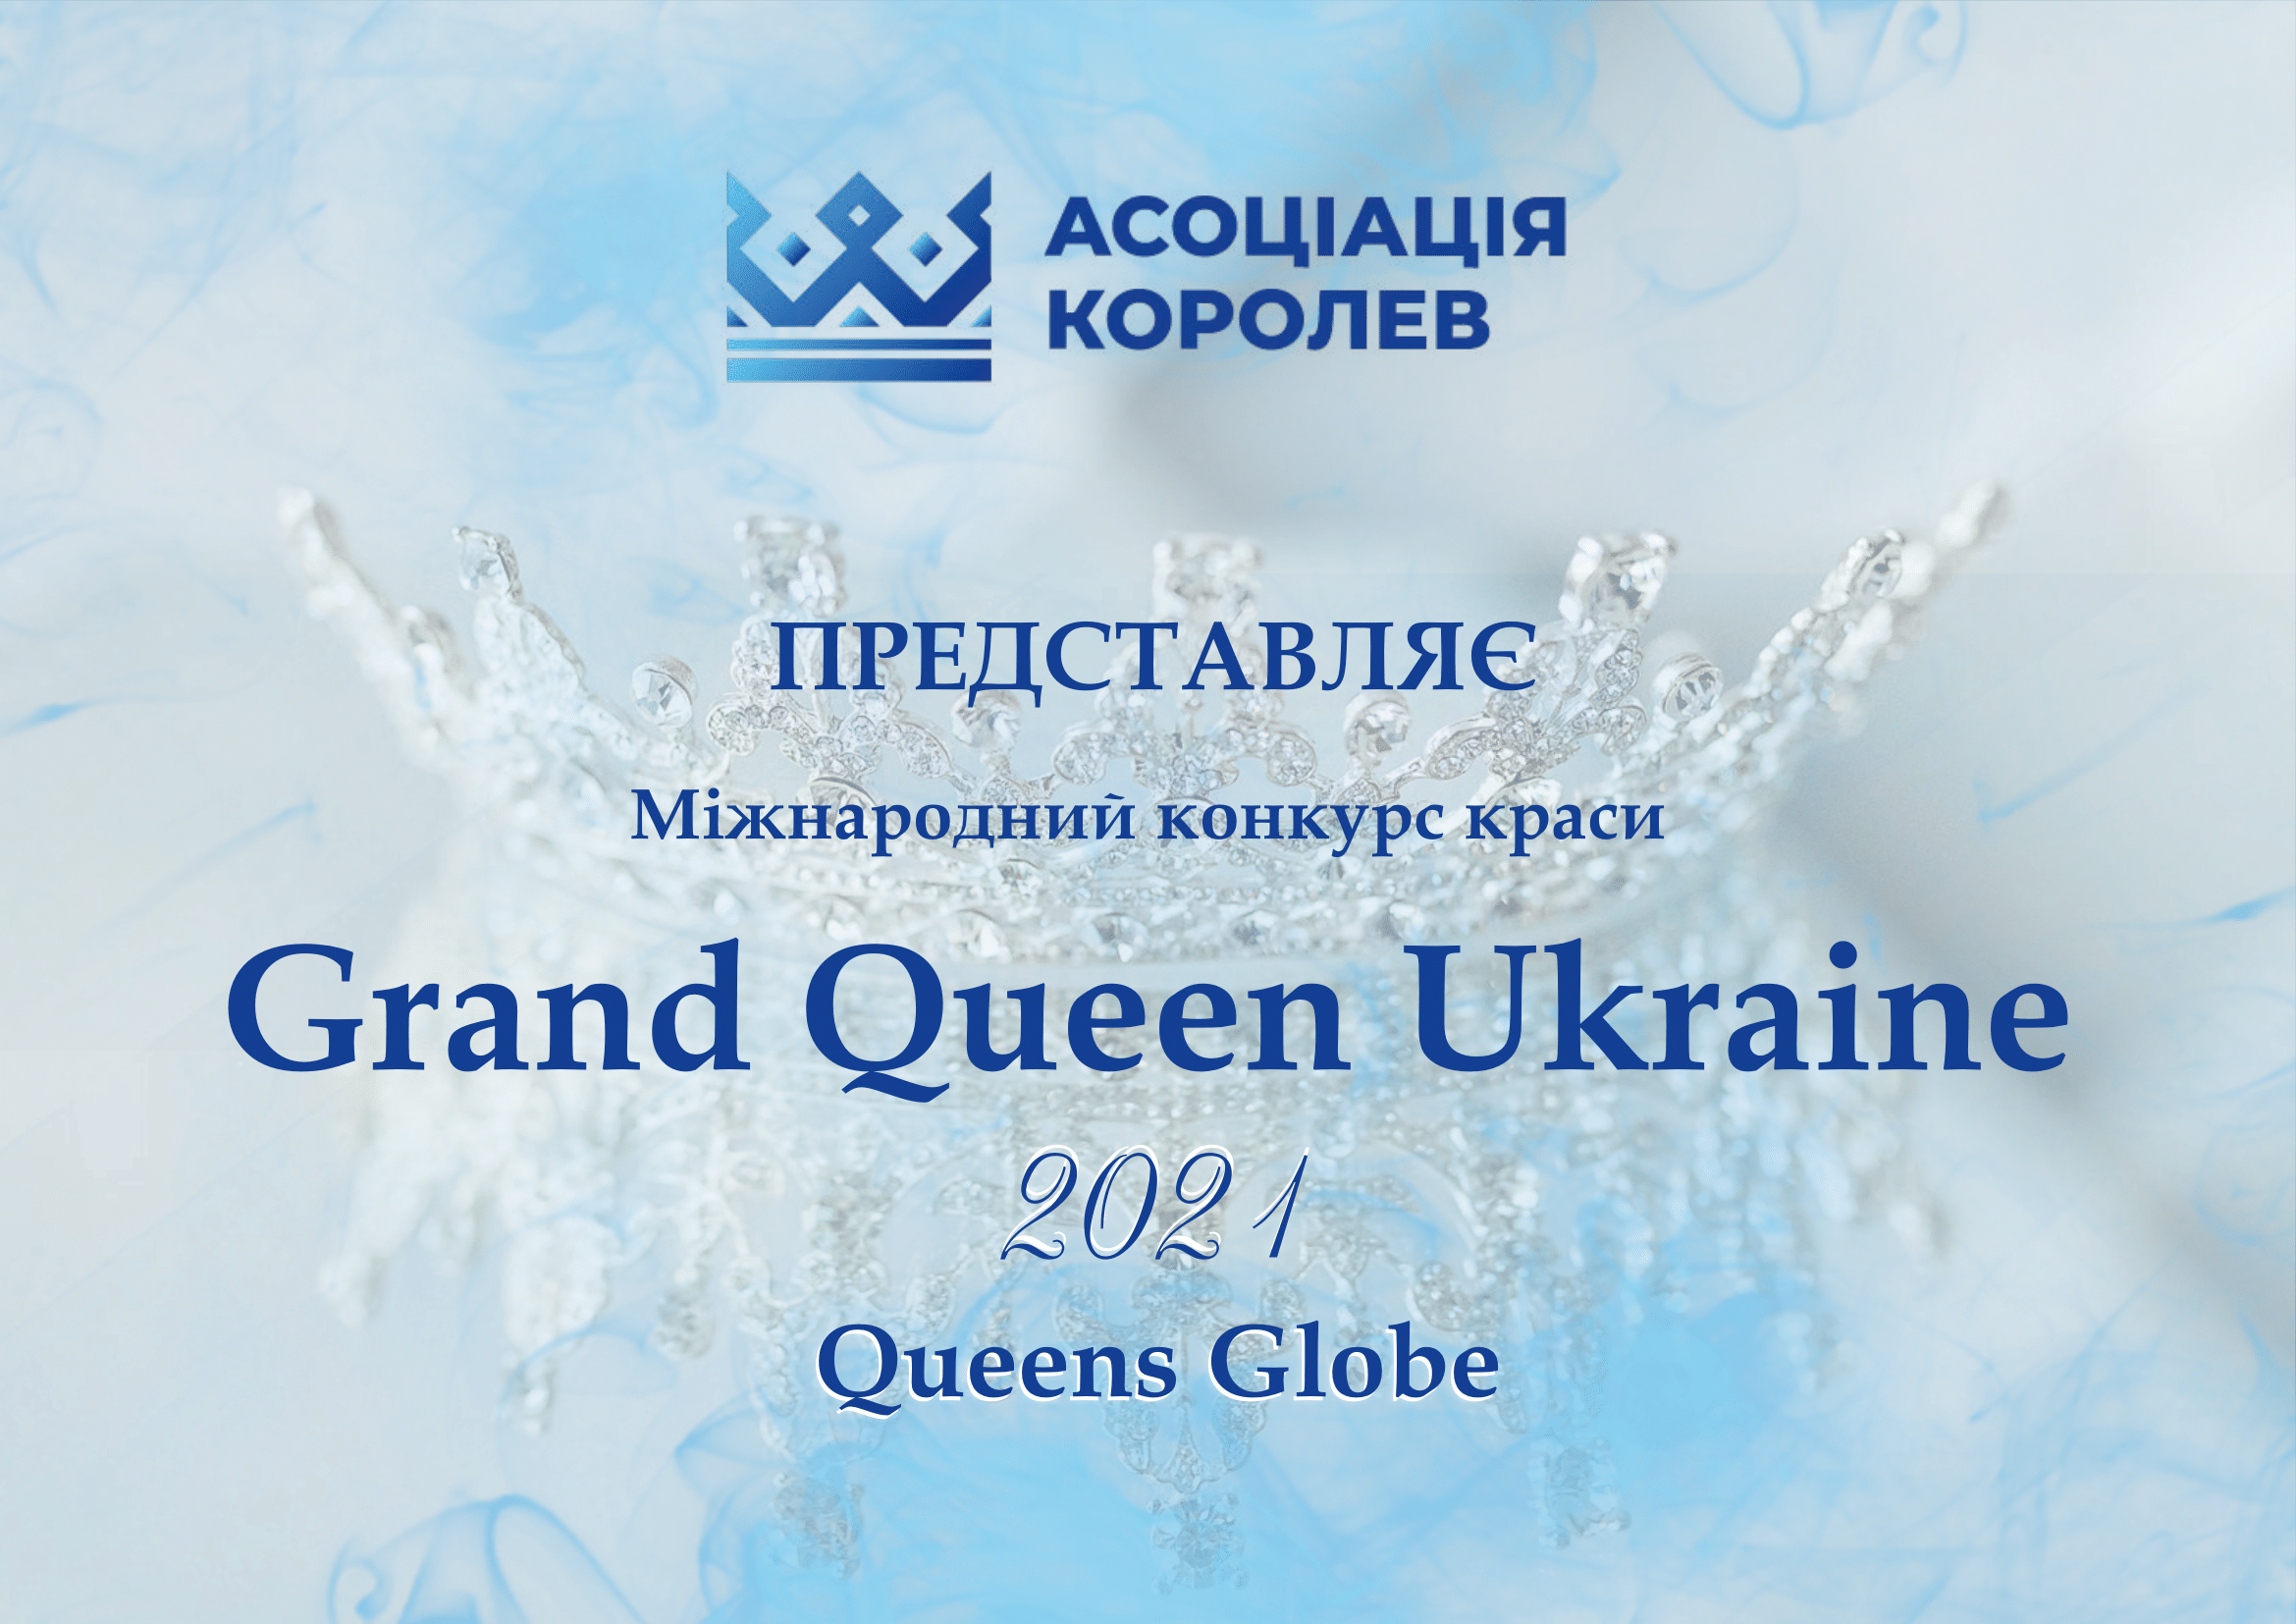 У Києві відбудеться конкурс краси Grand Queen Ukraine Queens Globe 2021